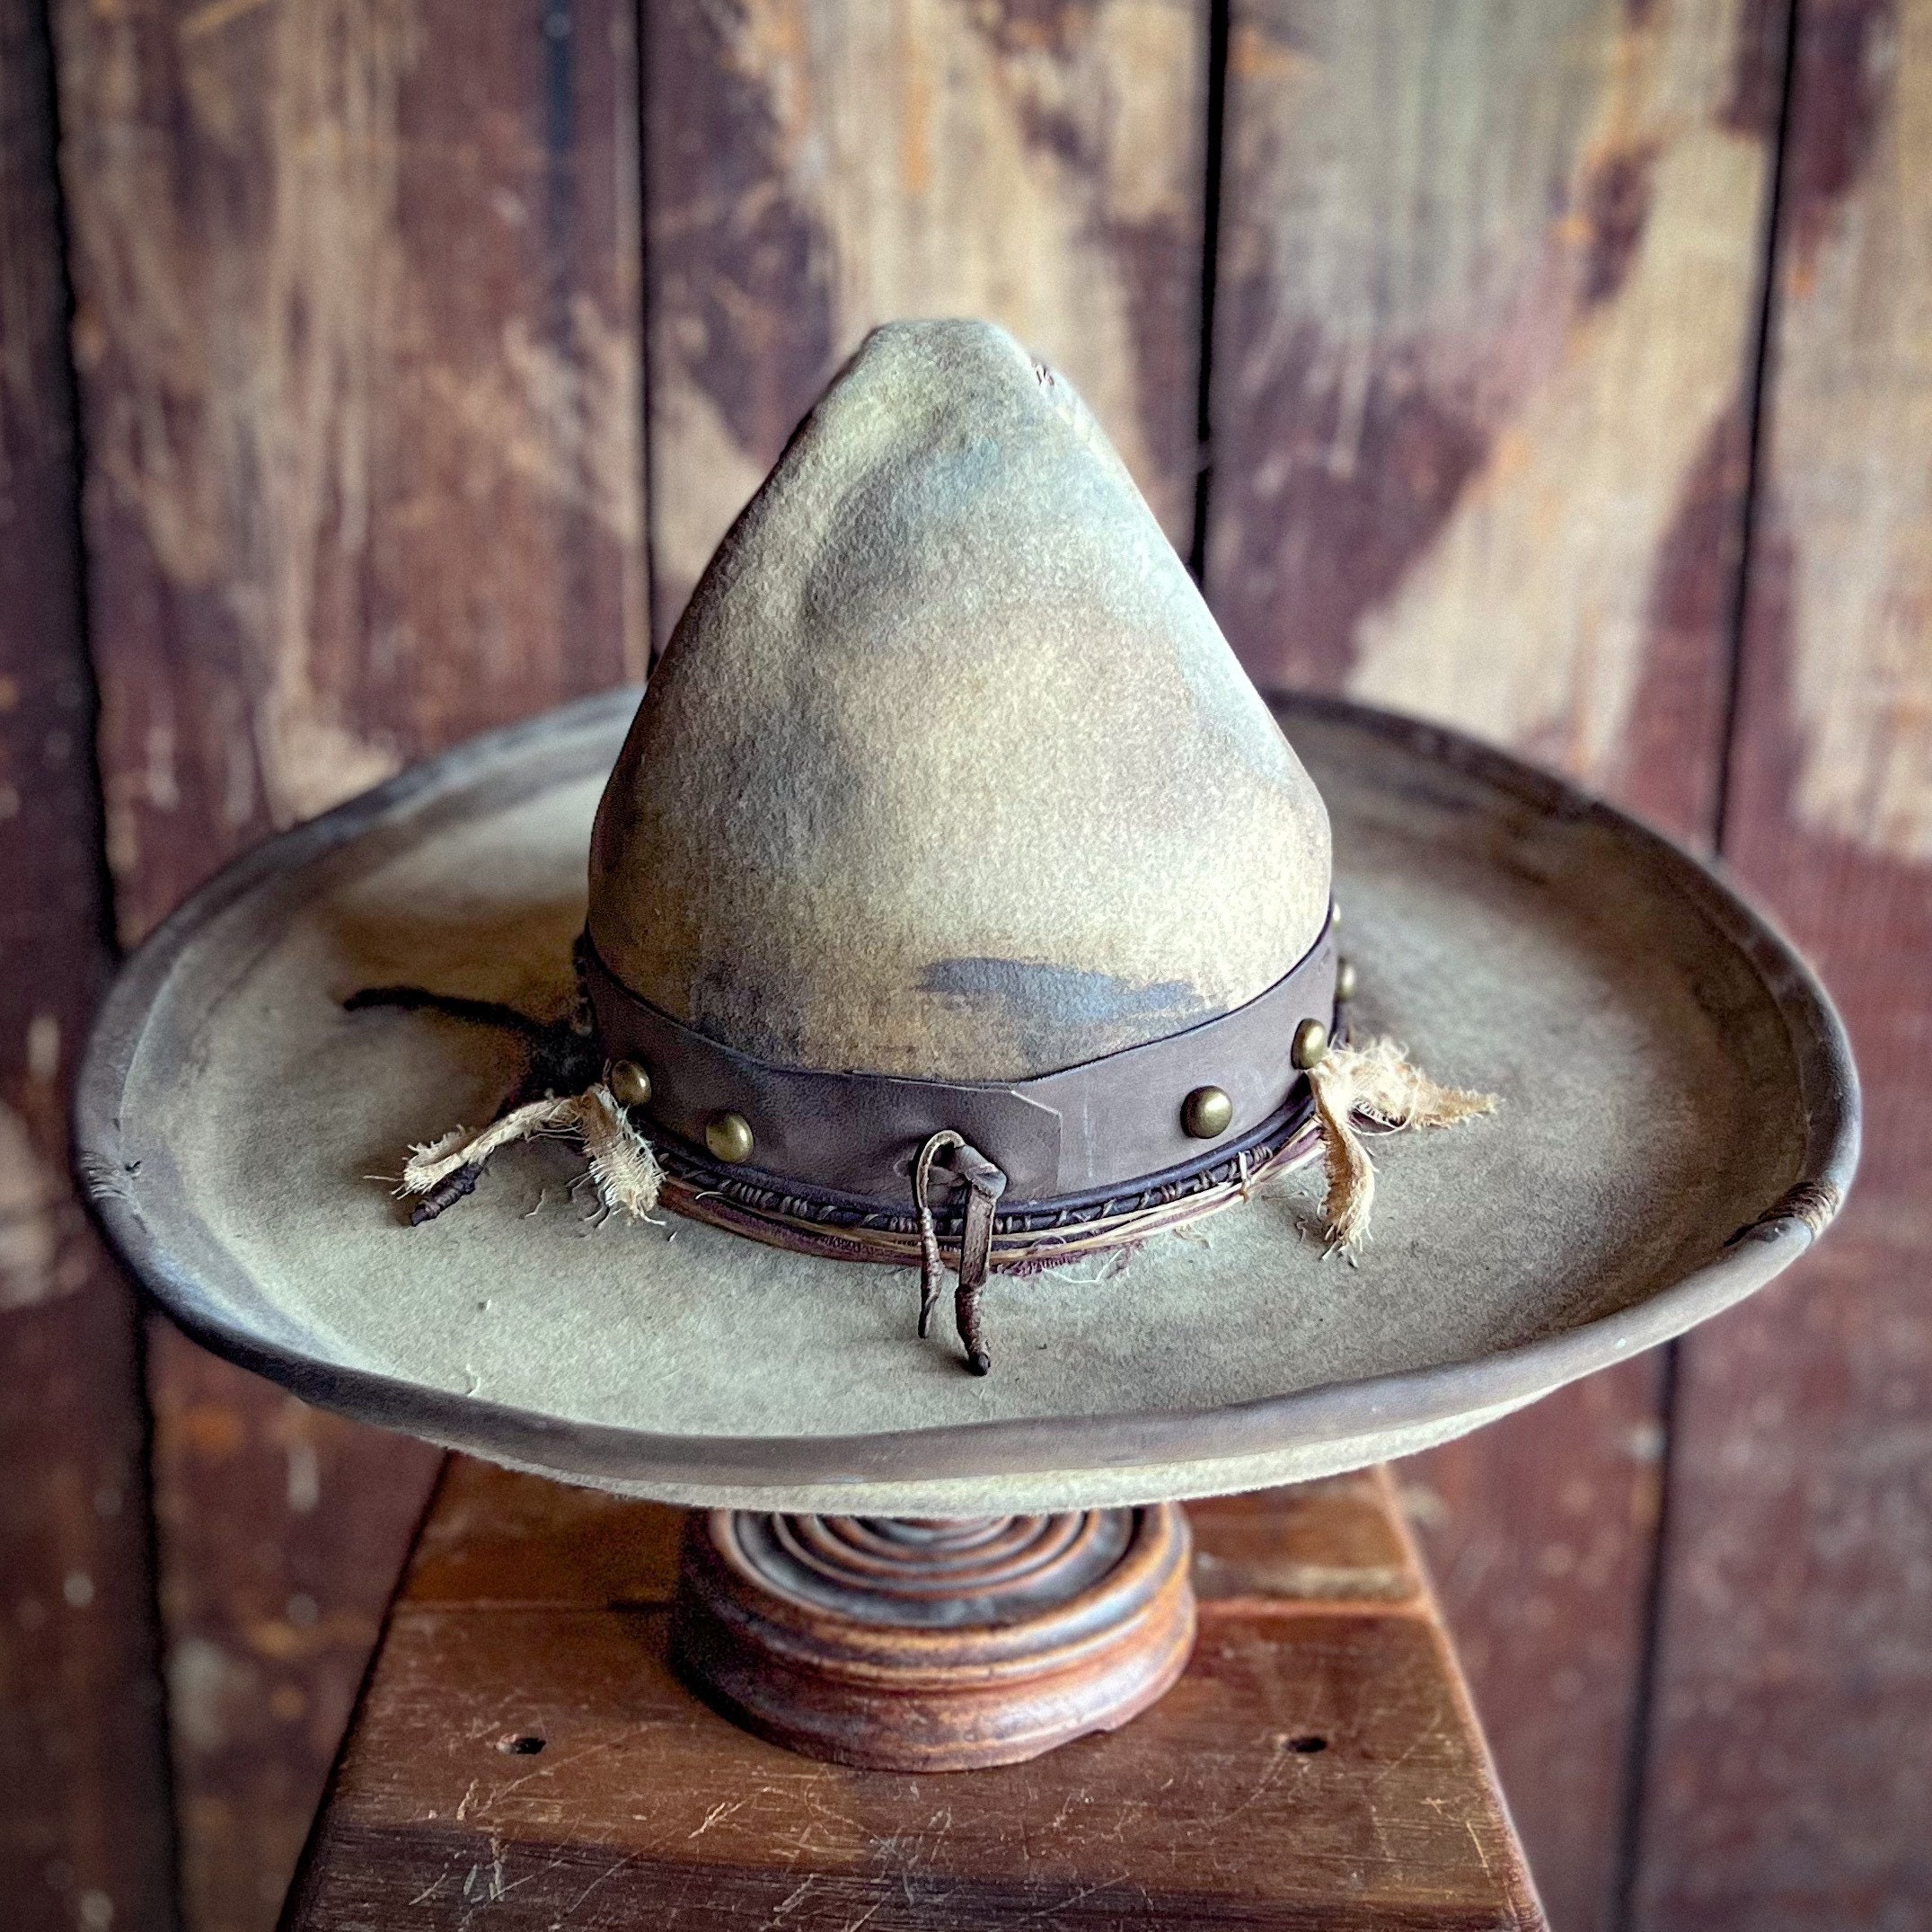 Cowboy hat/Sombrero size 7 1/4. The “Bandito feo de California